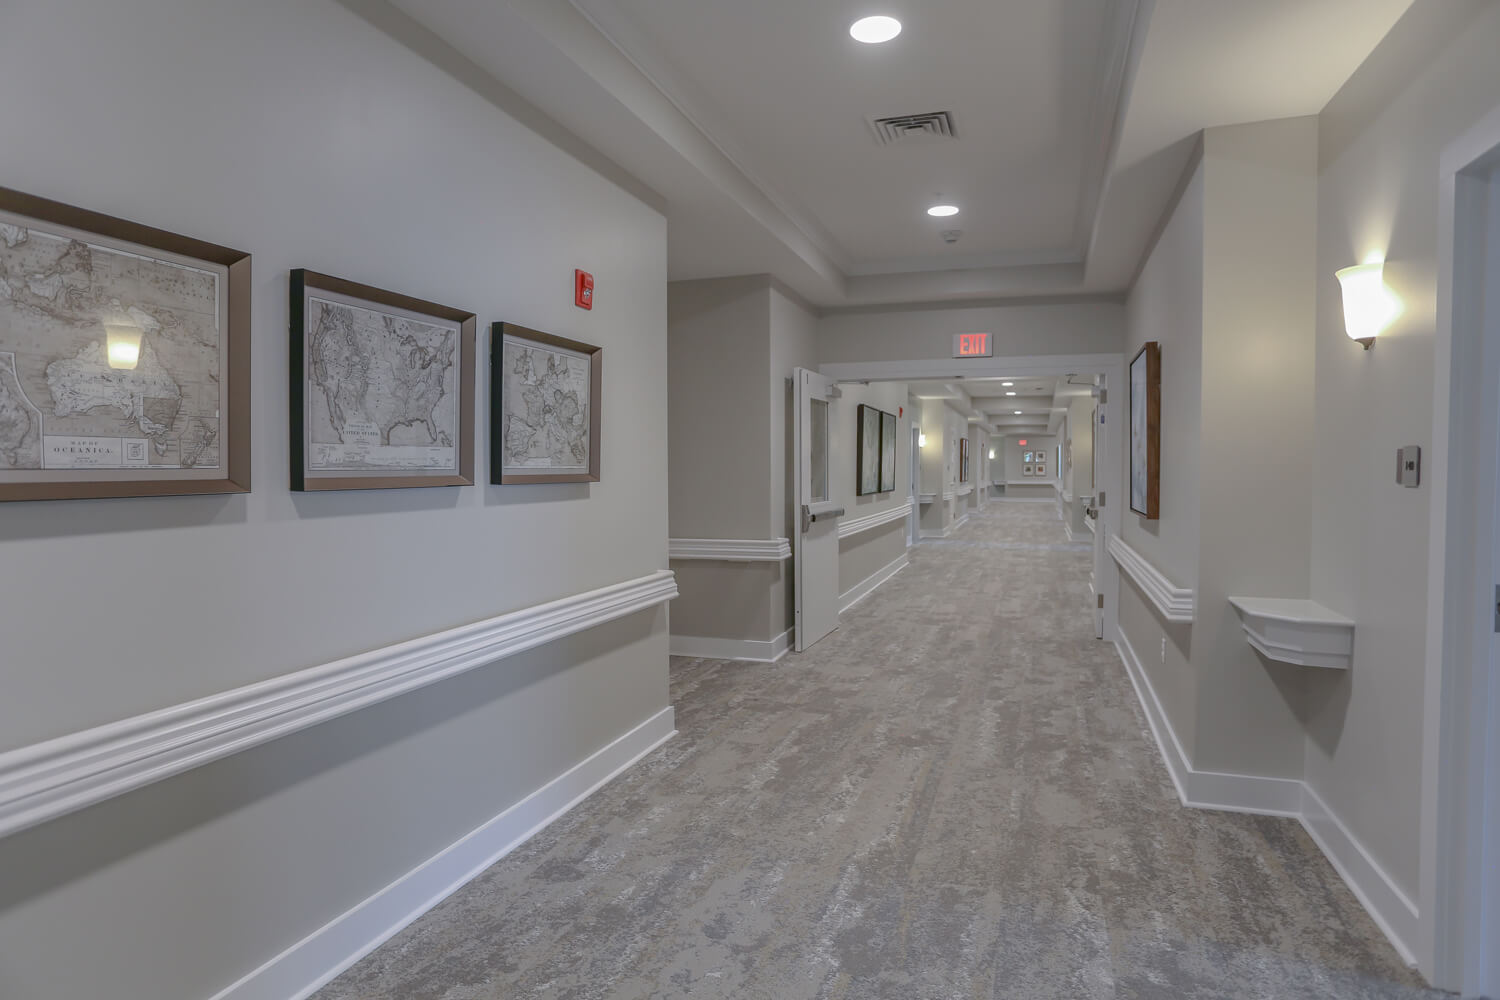 Grand South Senior Living - Corridor - Designed by Foshee Architecture